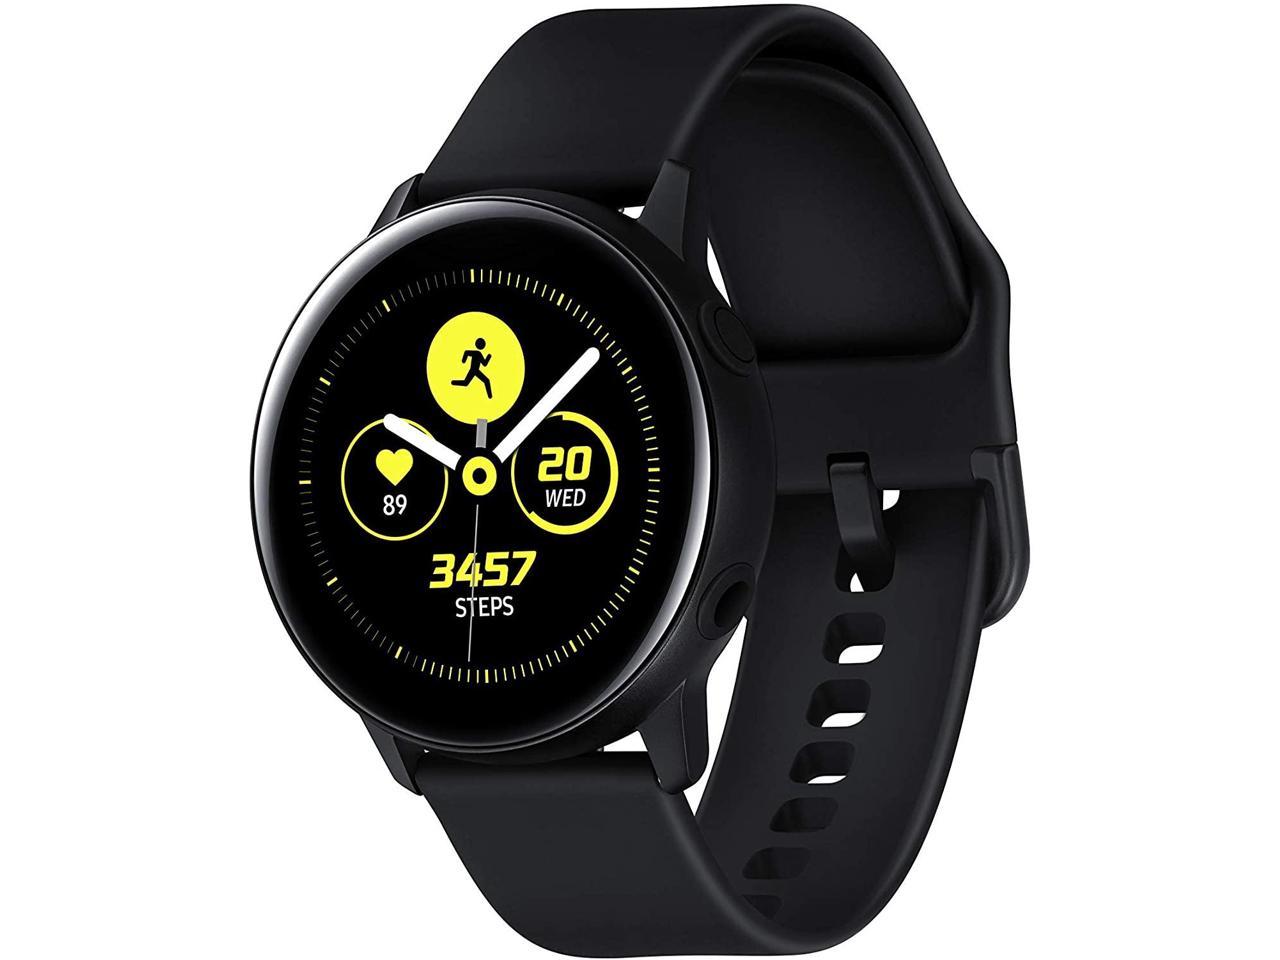 Refurbished: Samsung Galaxy Watch Active (40mm), Black (Bluetooth) - Wrist - Accelerometer 